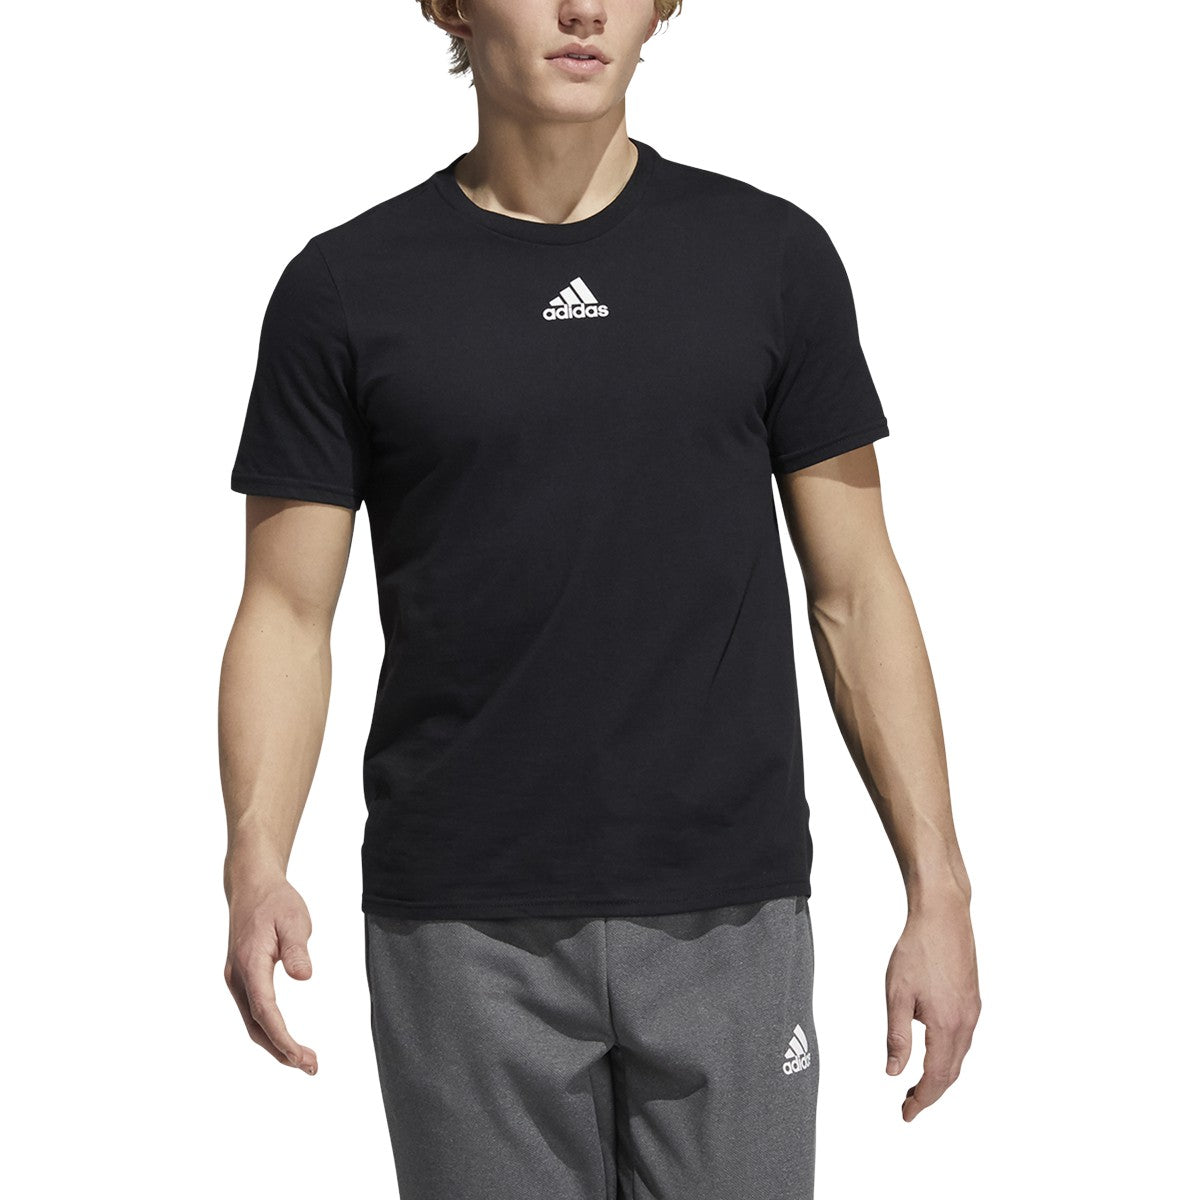 Louisiana Tech Bulldogs adidas Amplifier Short Sleeve Shirt Men's New 2XL